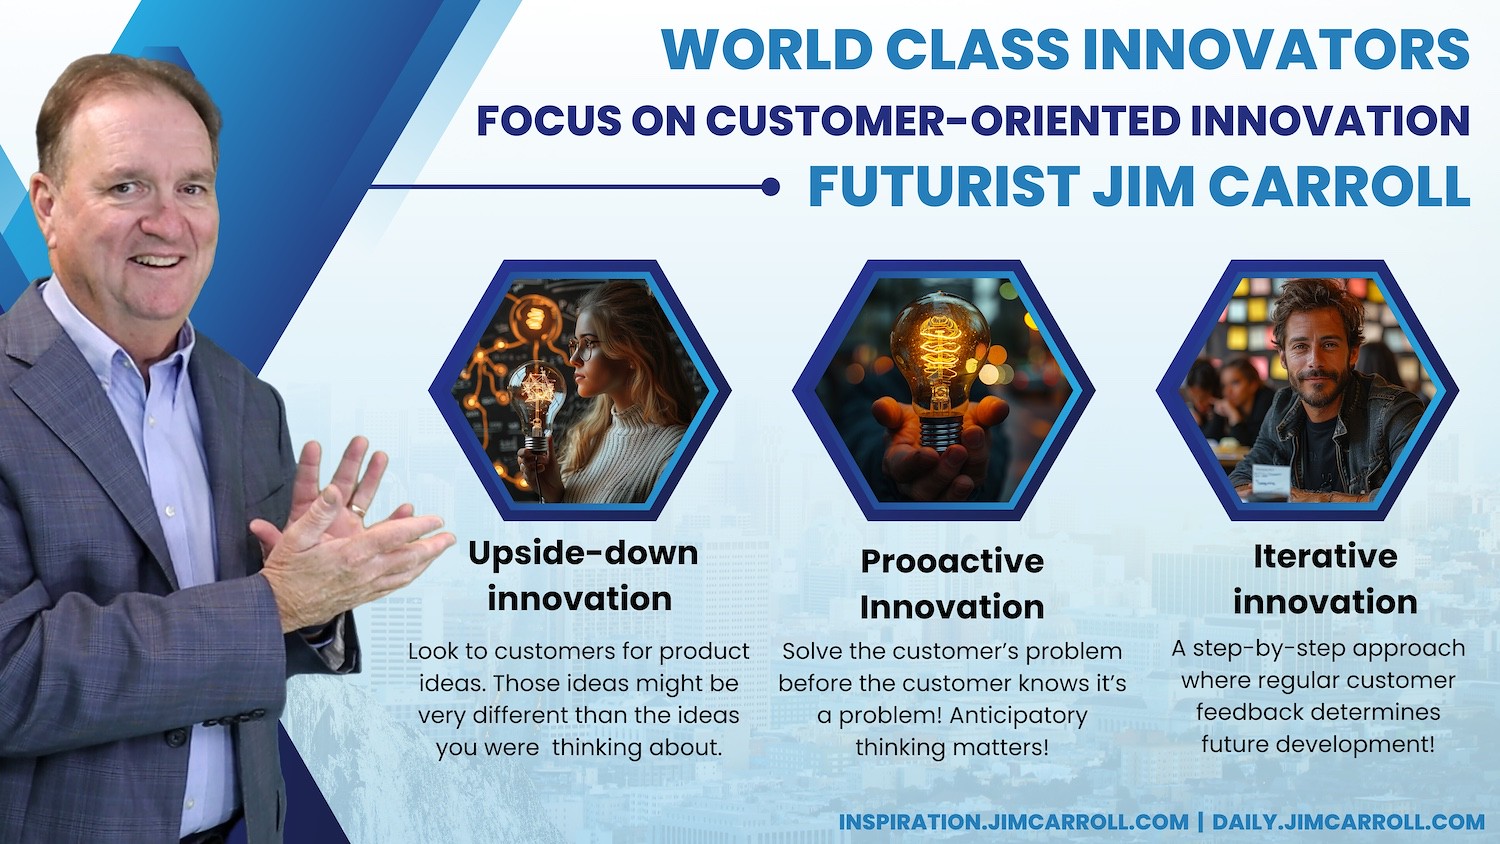 "World class innovators focus on customer-oriented innovation" - Futurist Jim Carroll